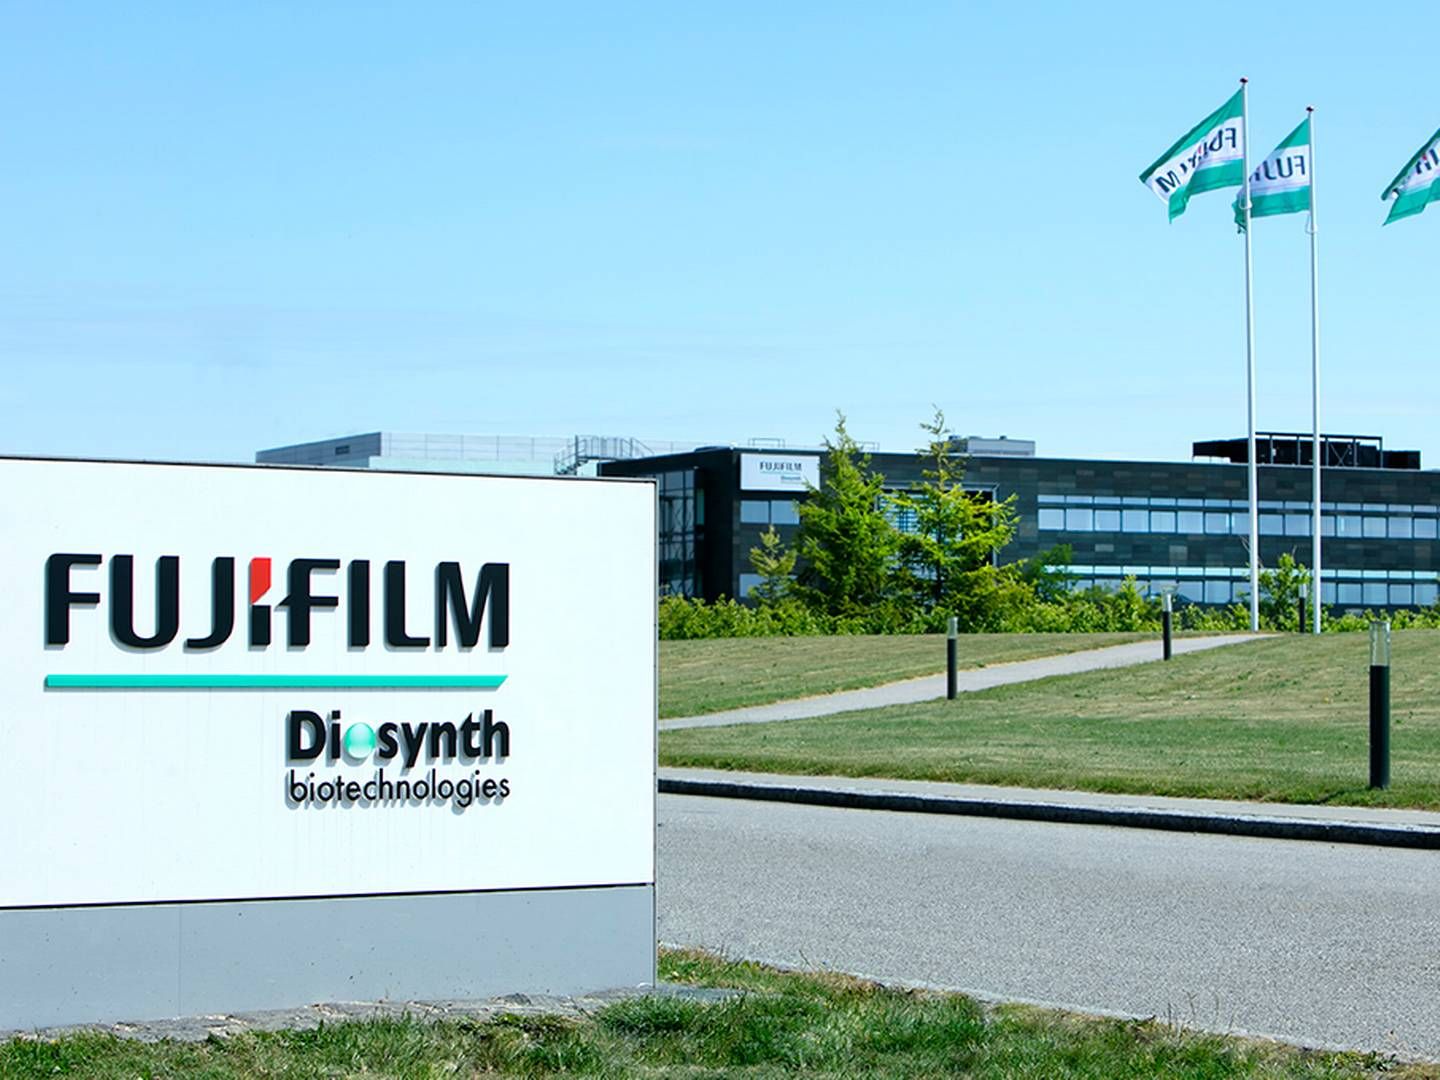 Fujifilm Diosynth Biotechnologies' factory in Hillerød, Denmark. | Photo: Liselotte Plenov / Fotorummet / Pr